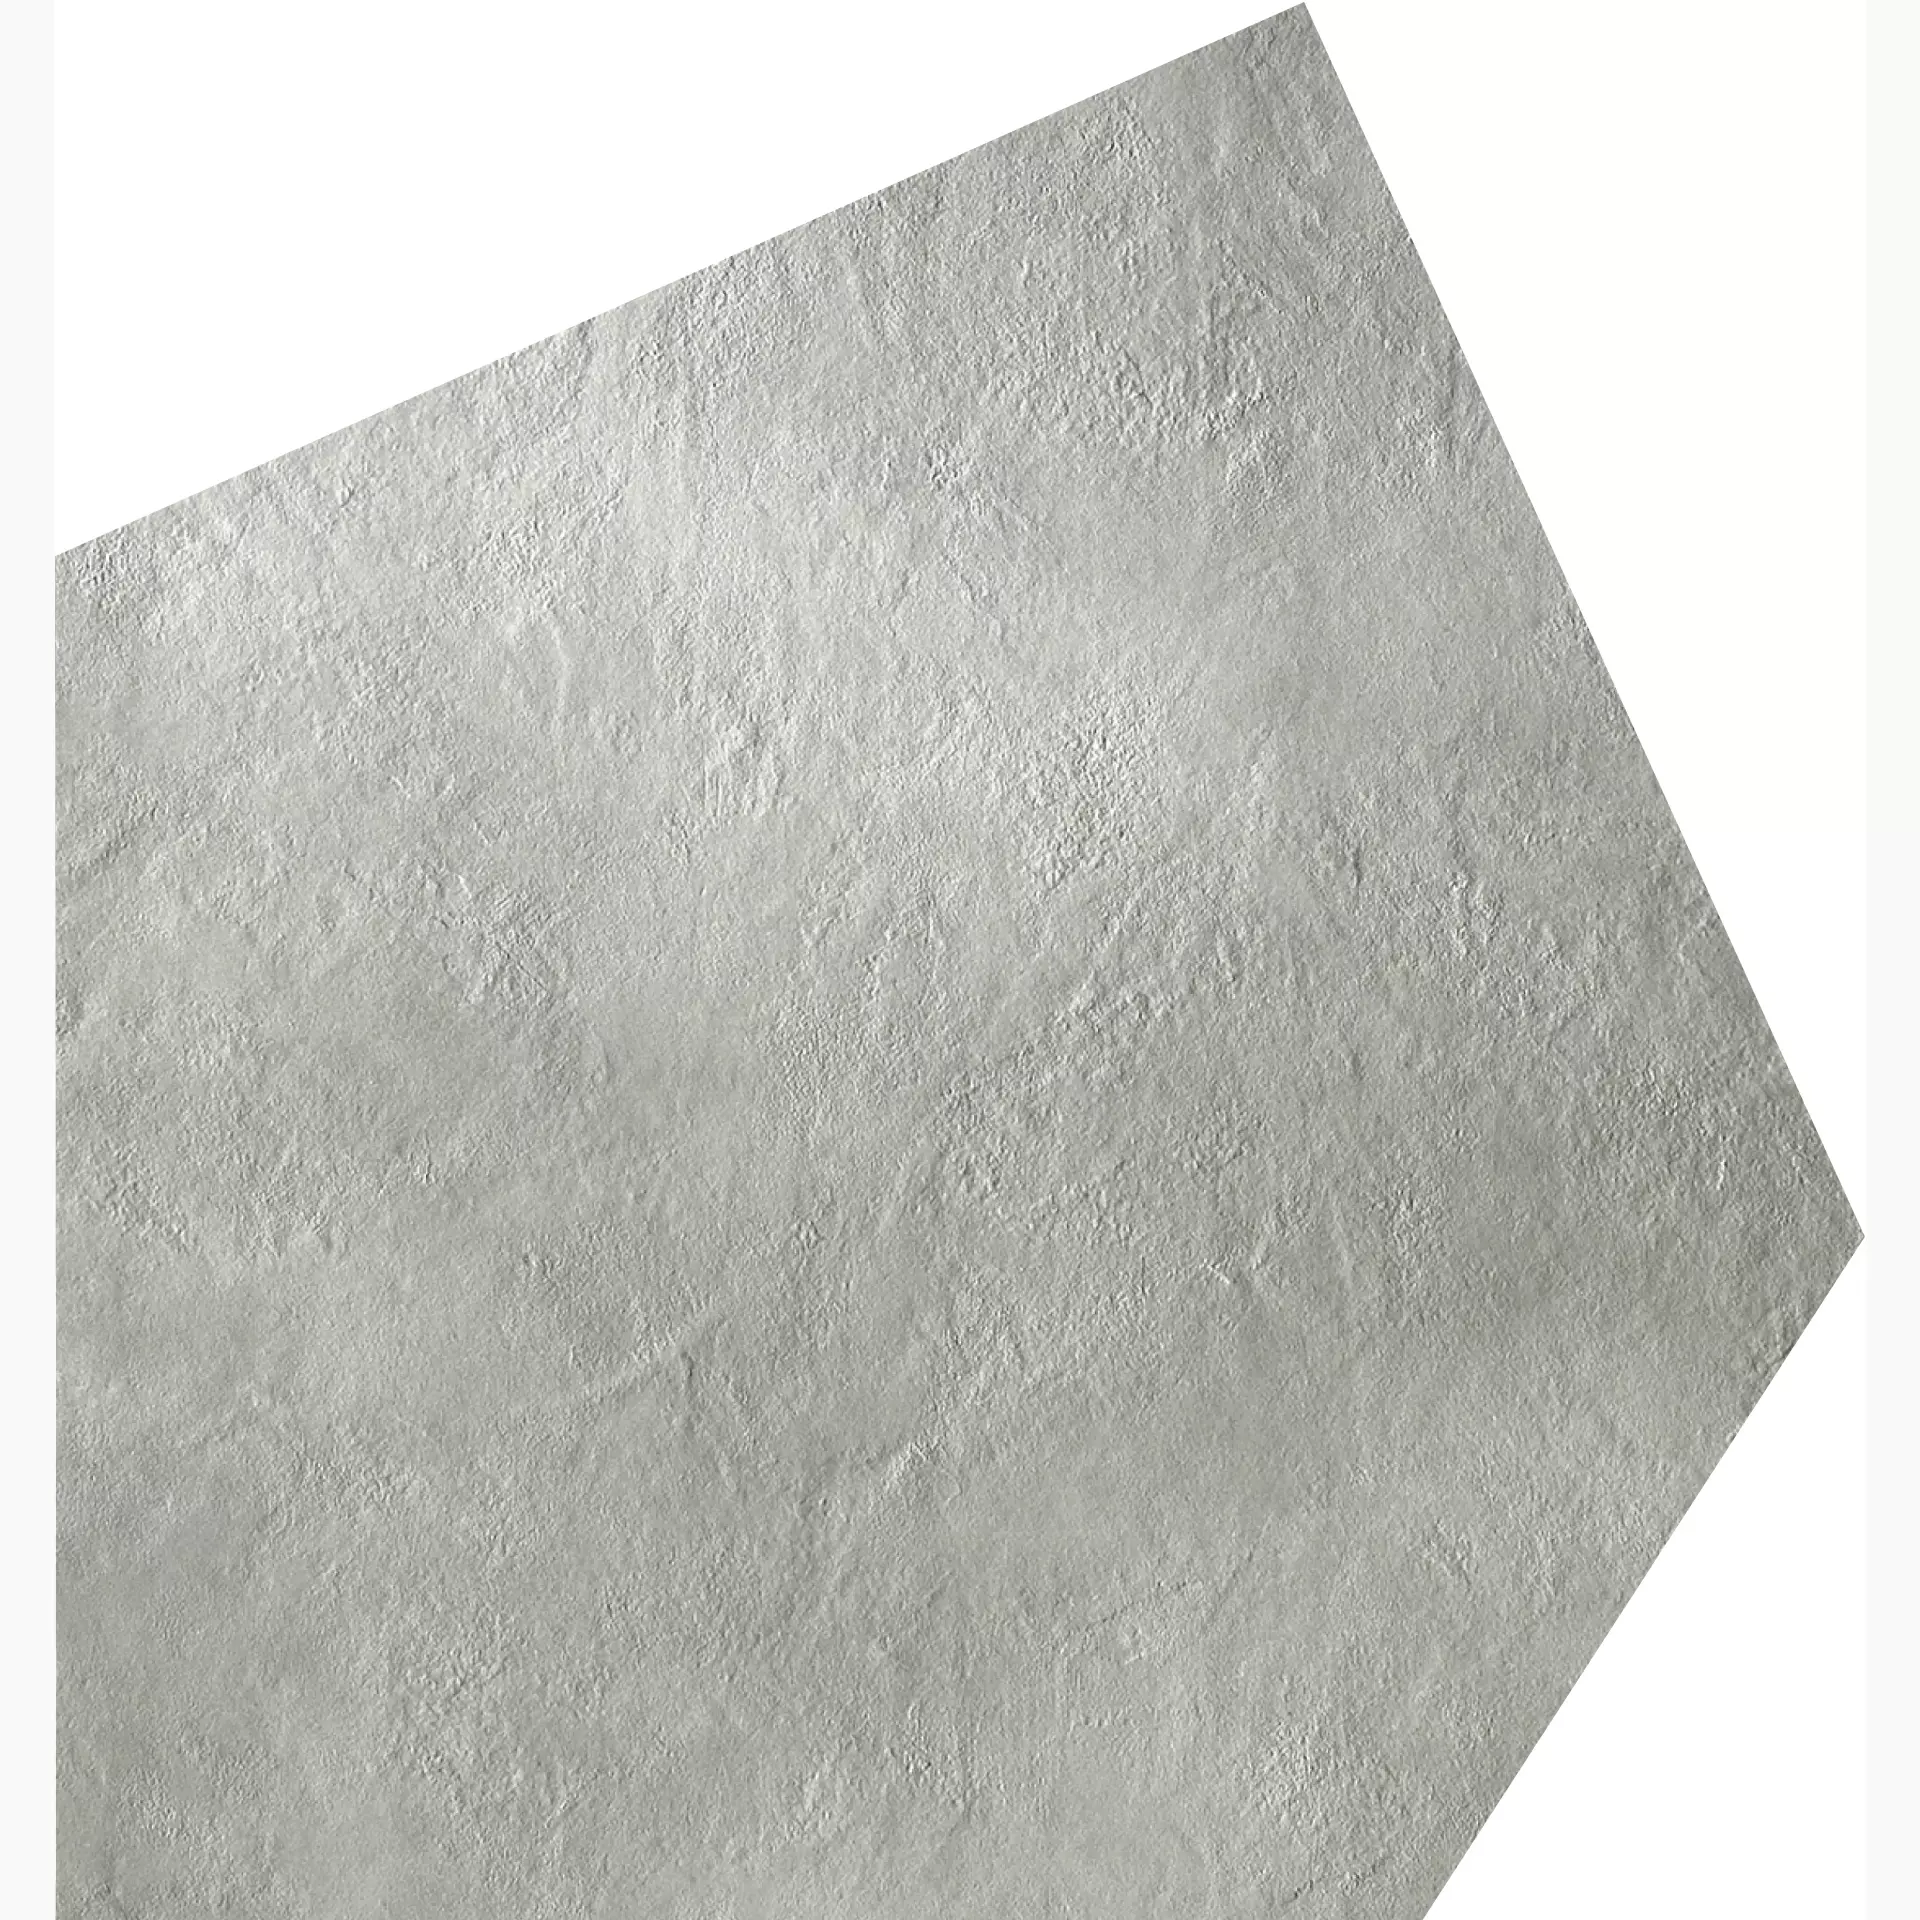 Gigacer Argilla Dry Quartz Dry 12ARGPENTLDRY poliert 119x119cm Dekor Large Pentagon 12mm